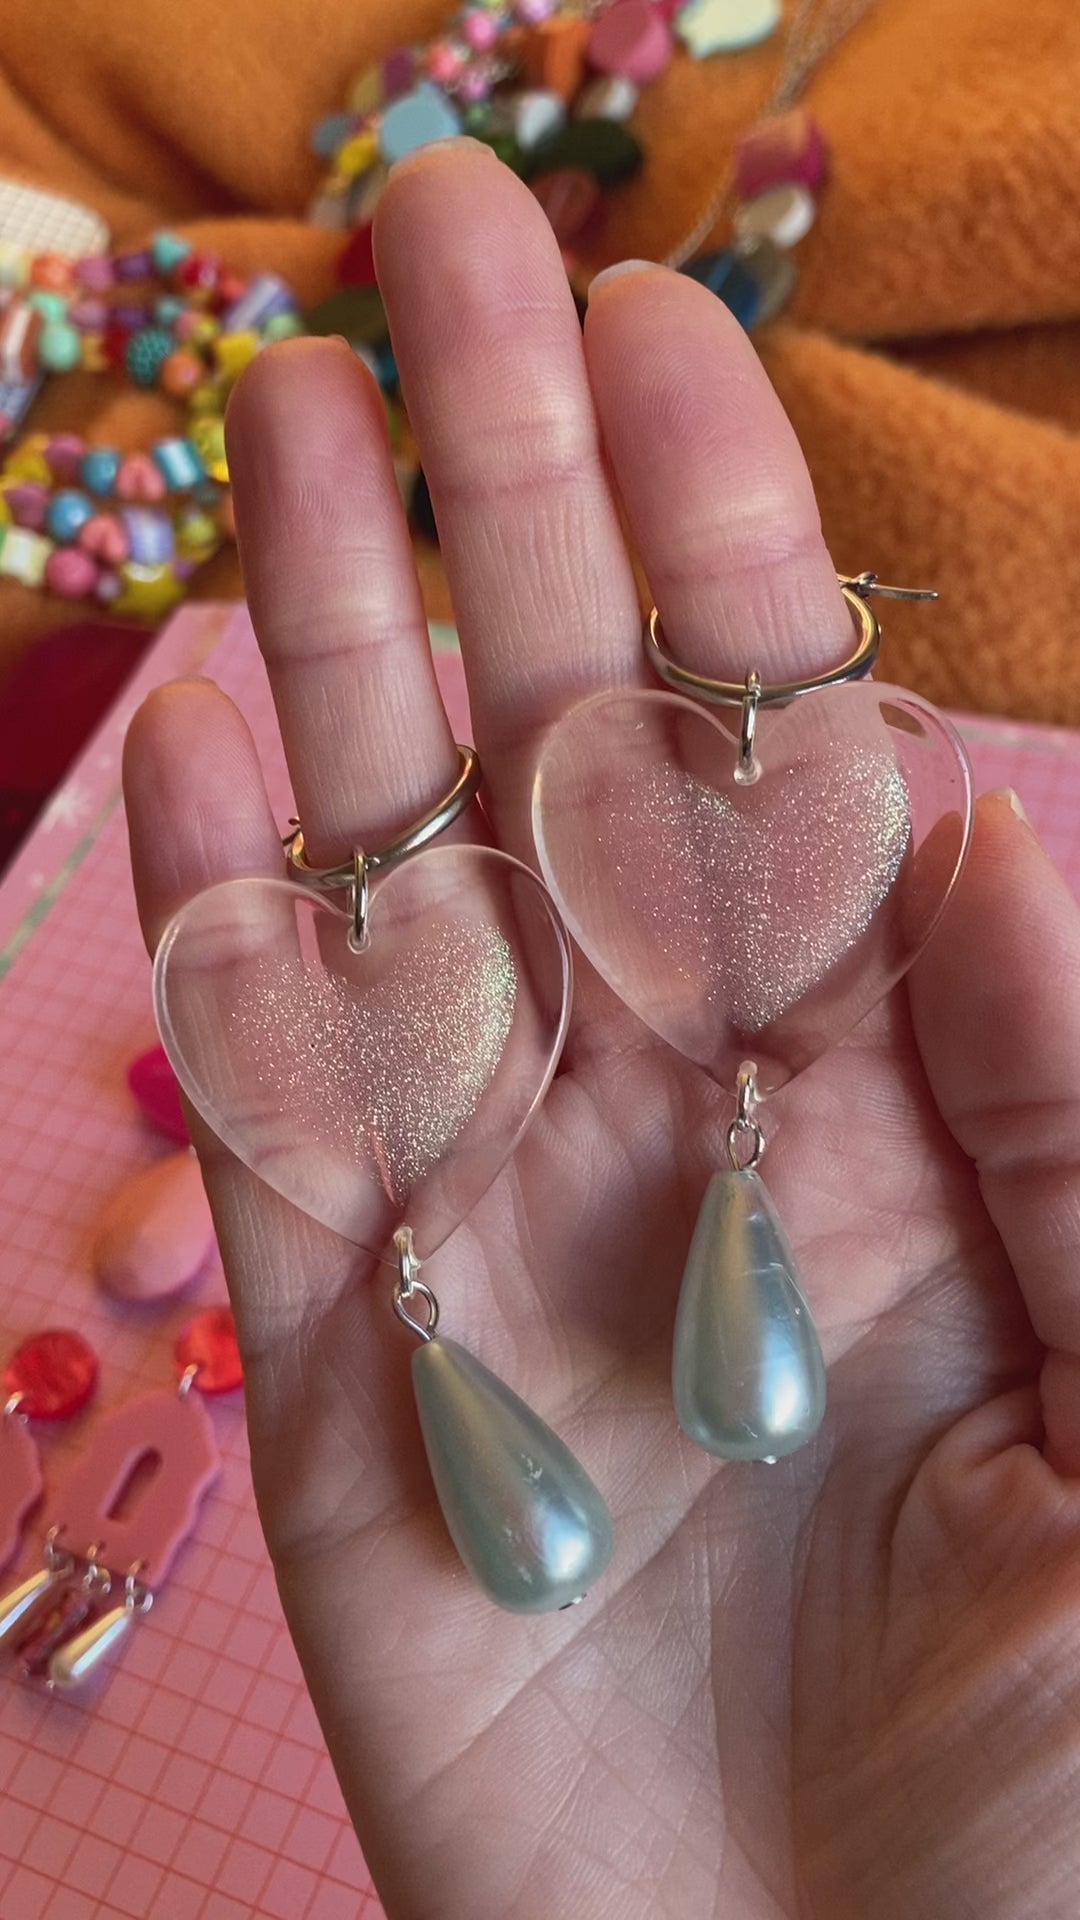 Squiggle Heart earrings